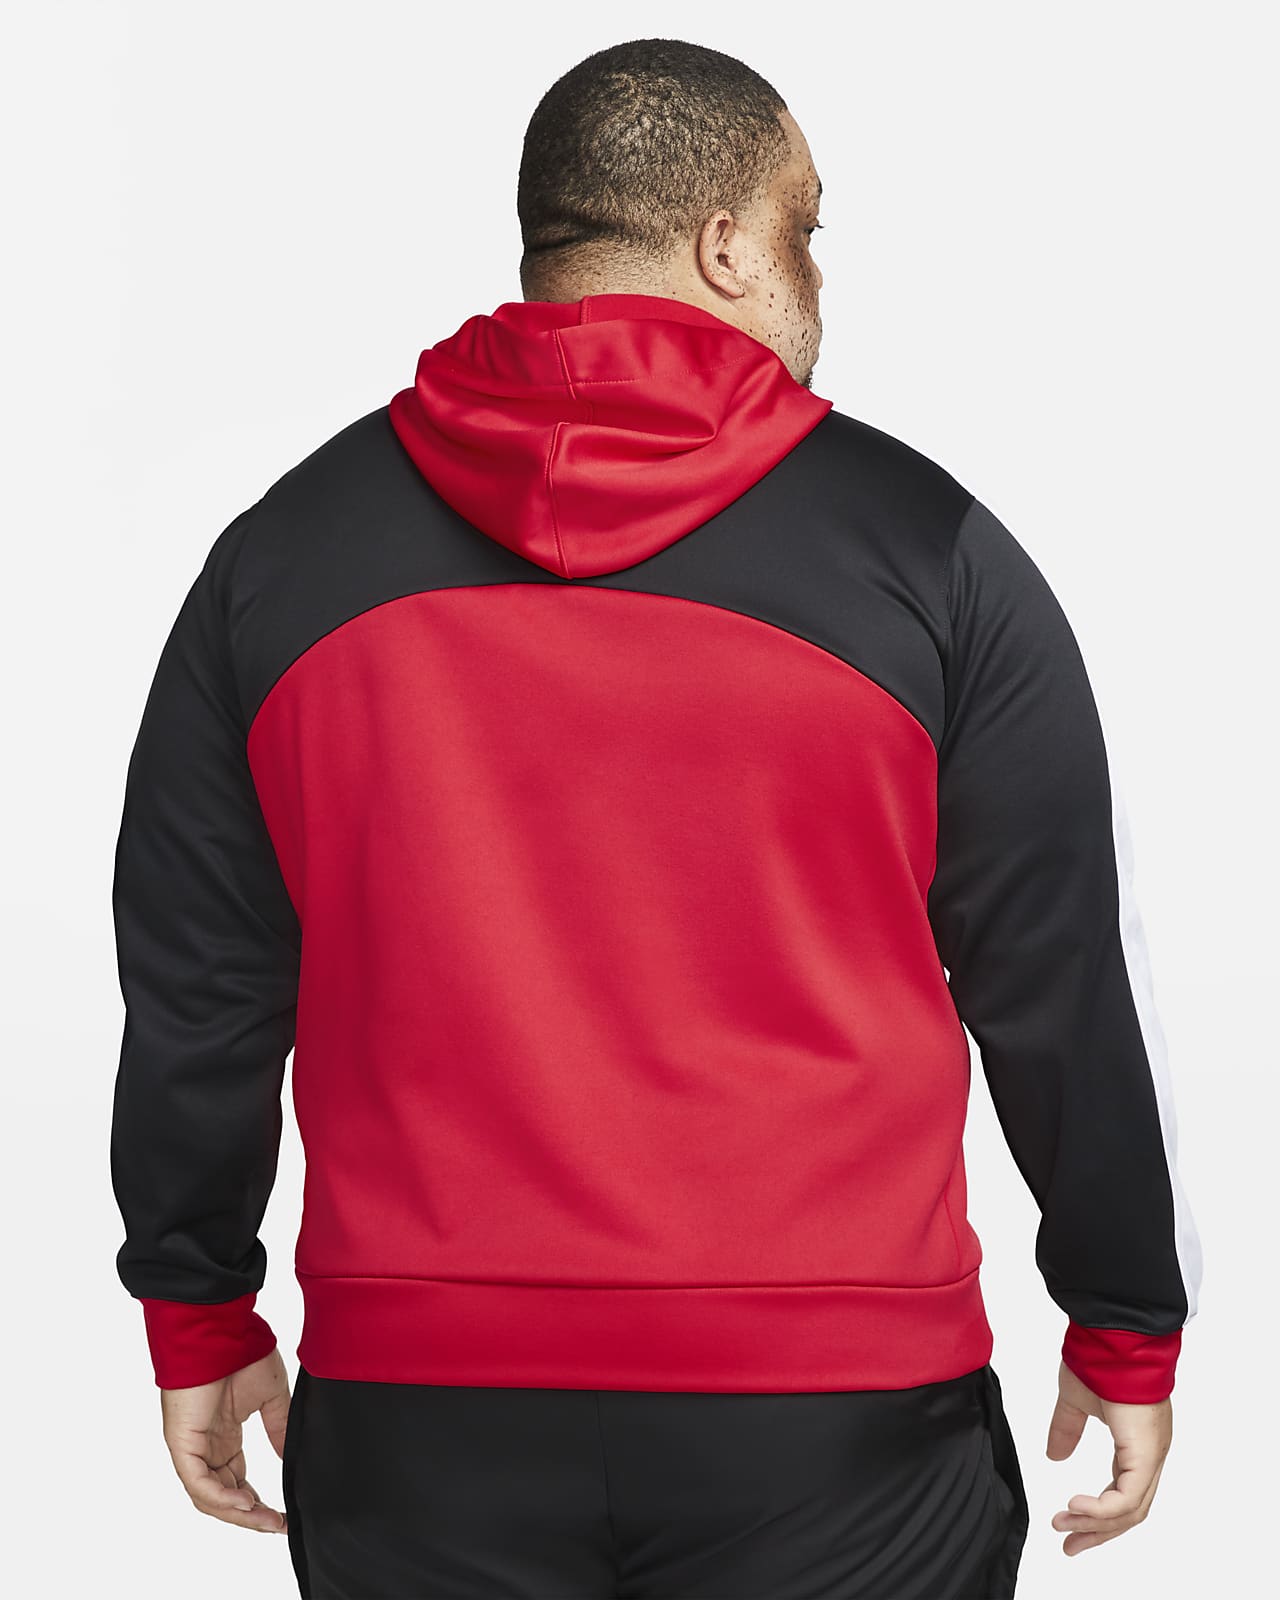 Nike Men's Starting 5 (White/Black) Basketball Jacket Size at  Men’s  Clothing store